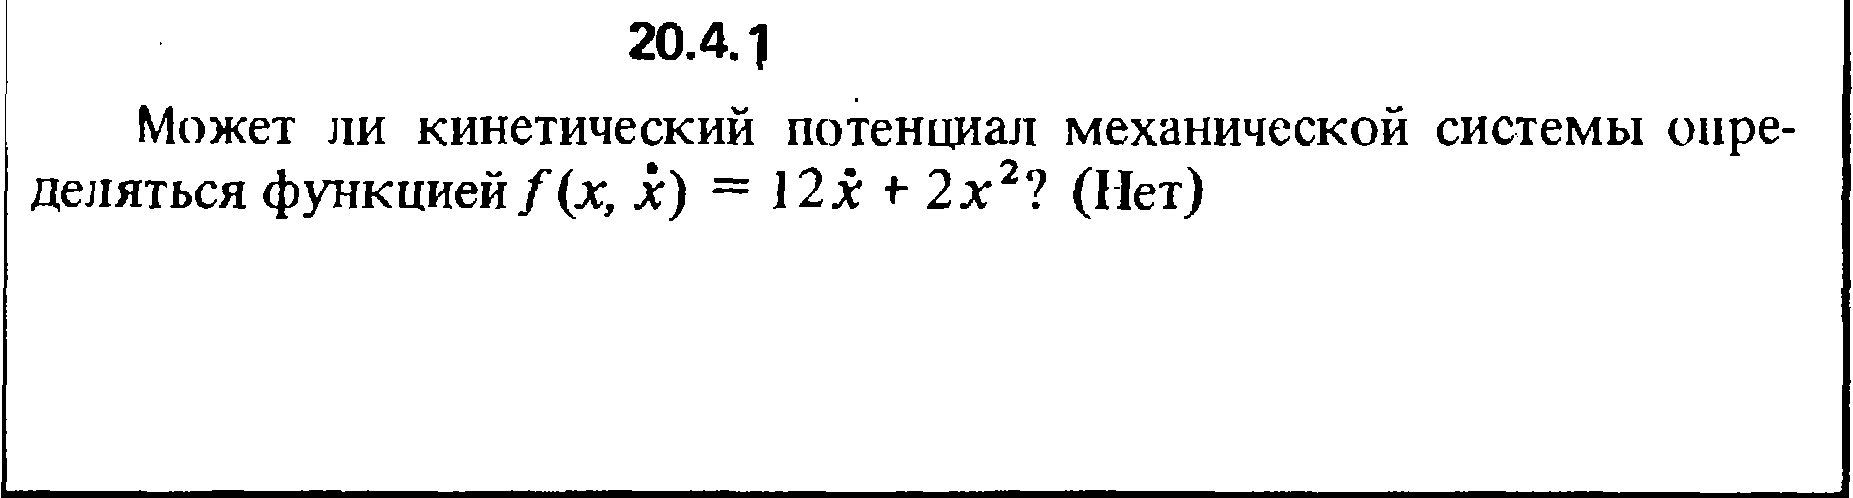 Решение 20.4.1 из сборника (решебника) Кепе О.Е. 1989